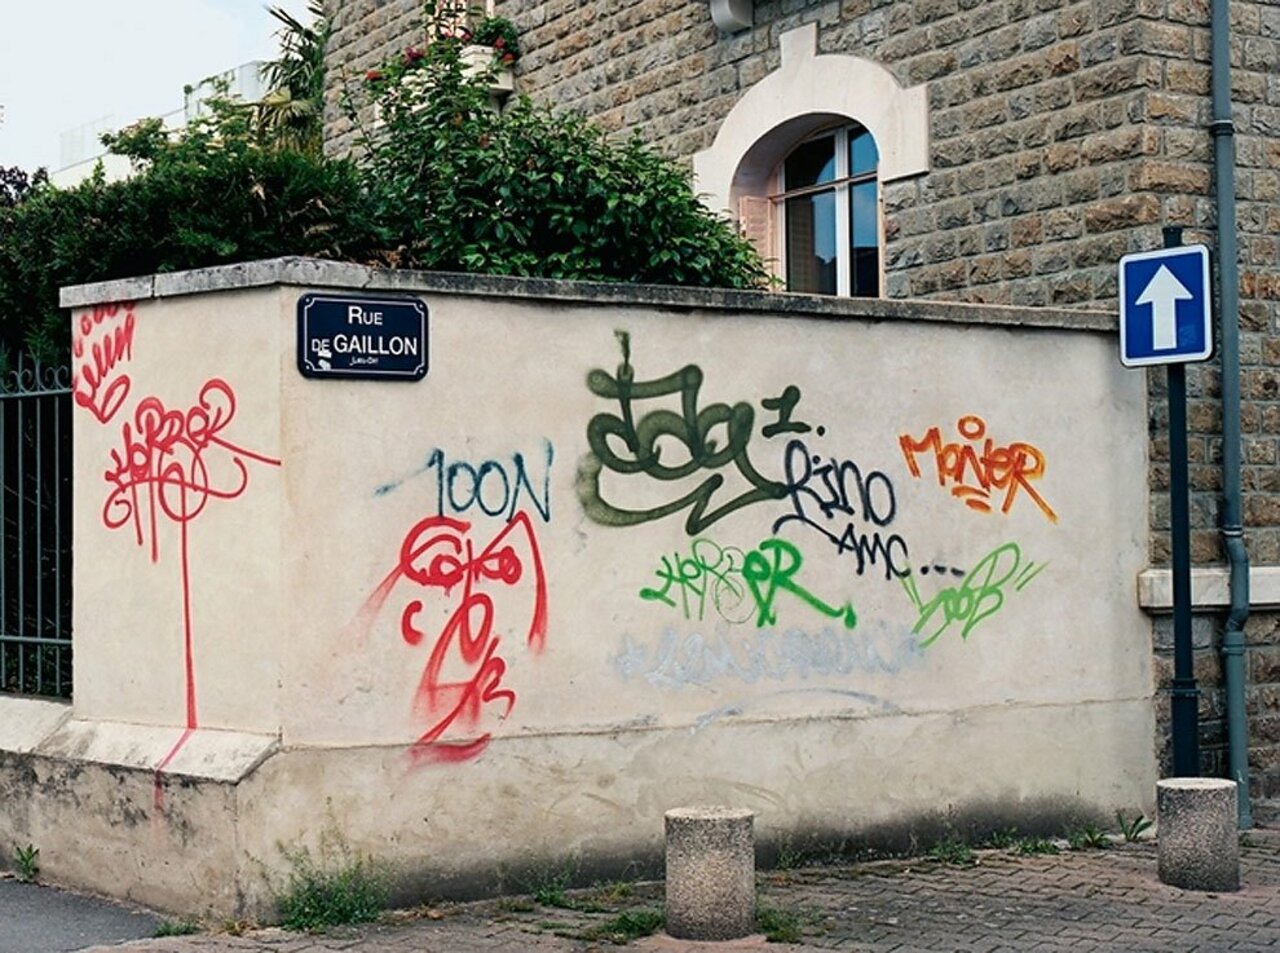 Street Artist Mathieu Tremblin paints over ugly graffiti to make it legible. https://t.co/5duRStEoFt